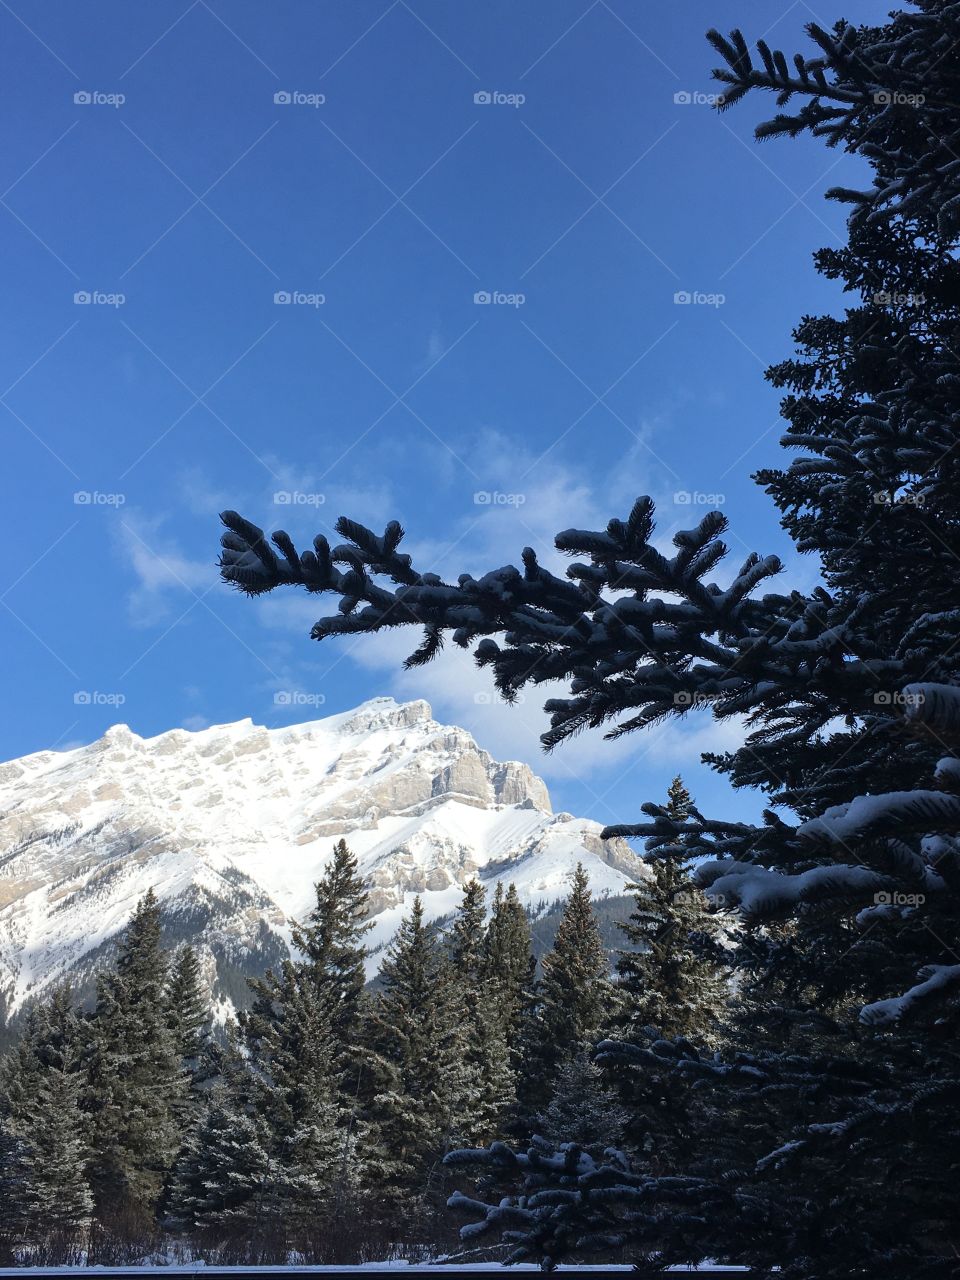 Nature Banff scenic 